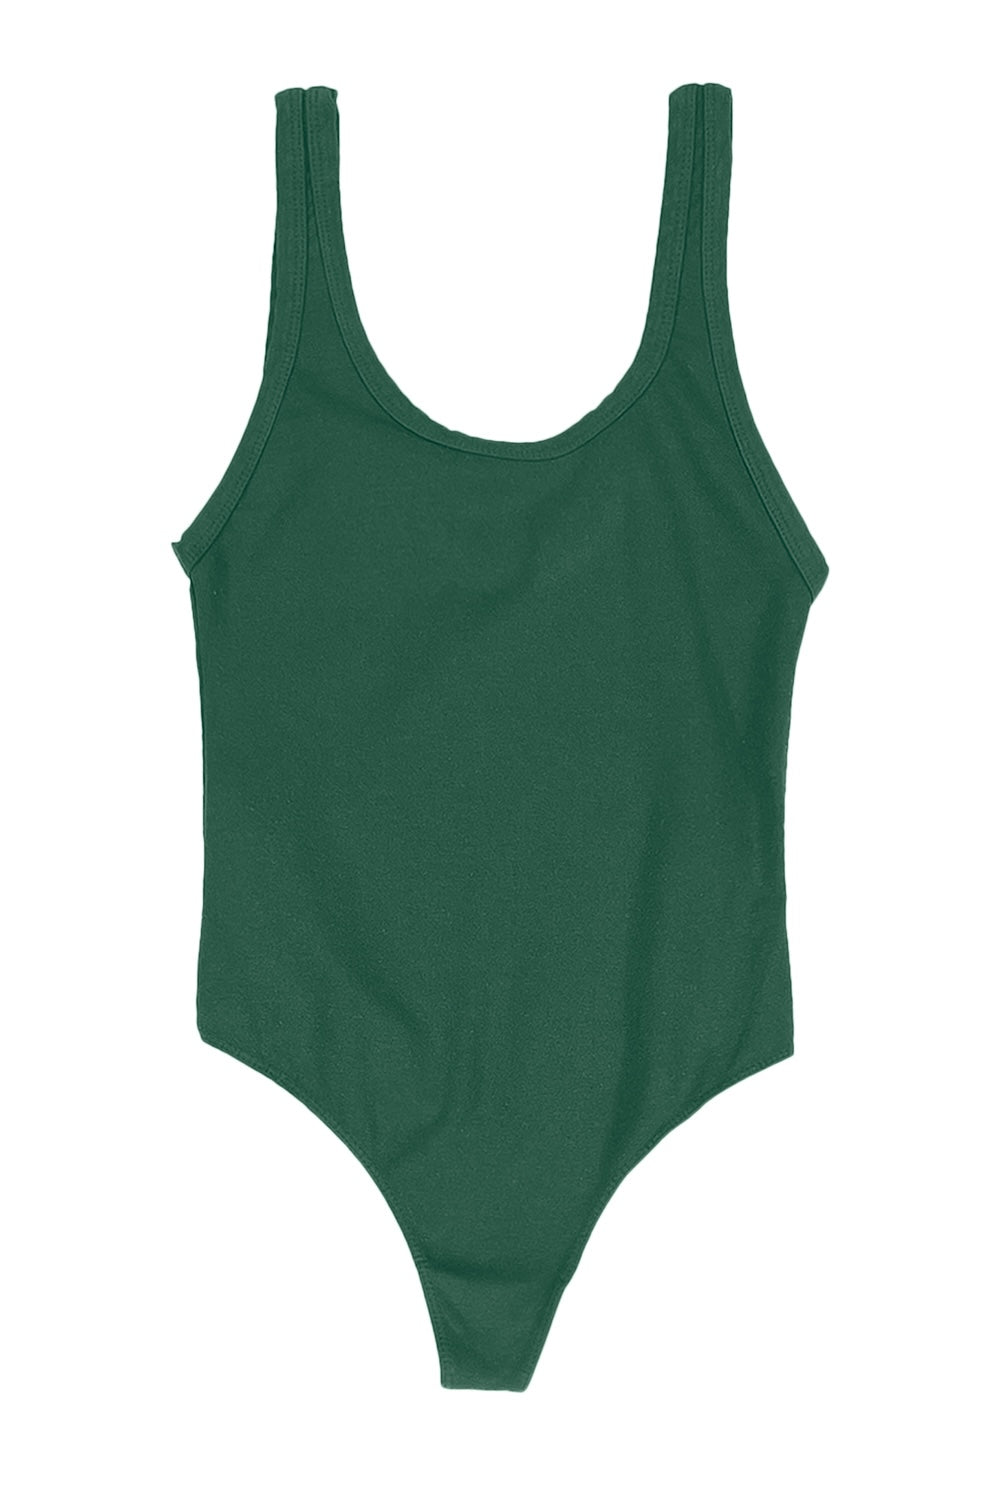 Bodysuit | Jungmaven Hemp Clothing & Accessories / Color: Hunter Green